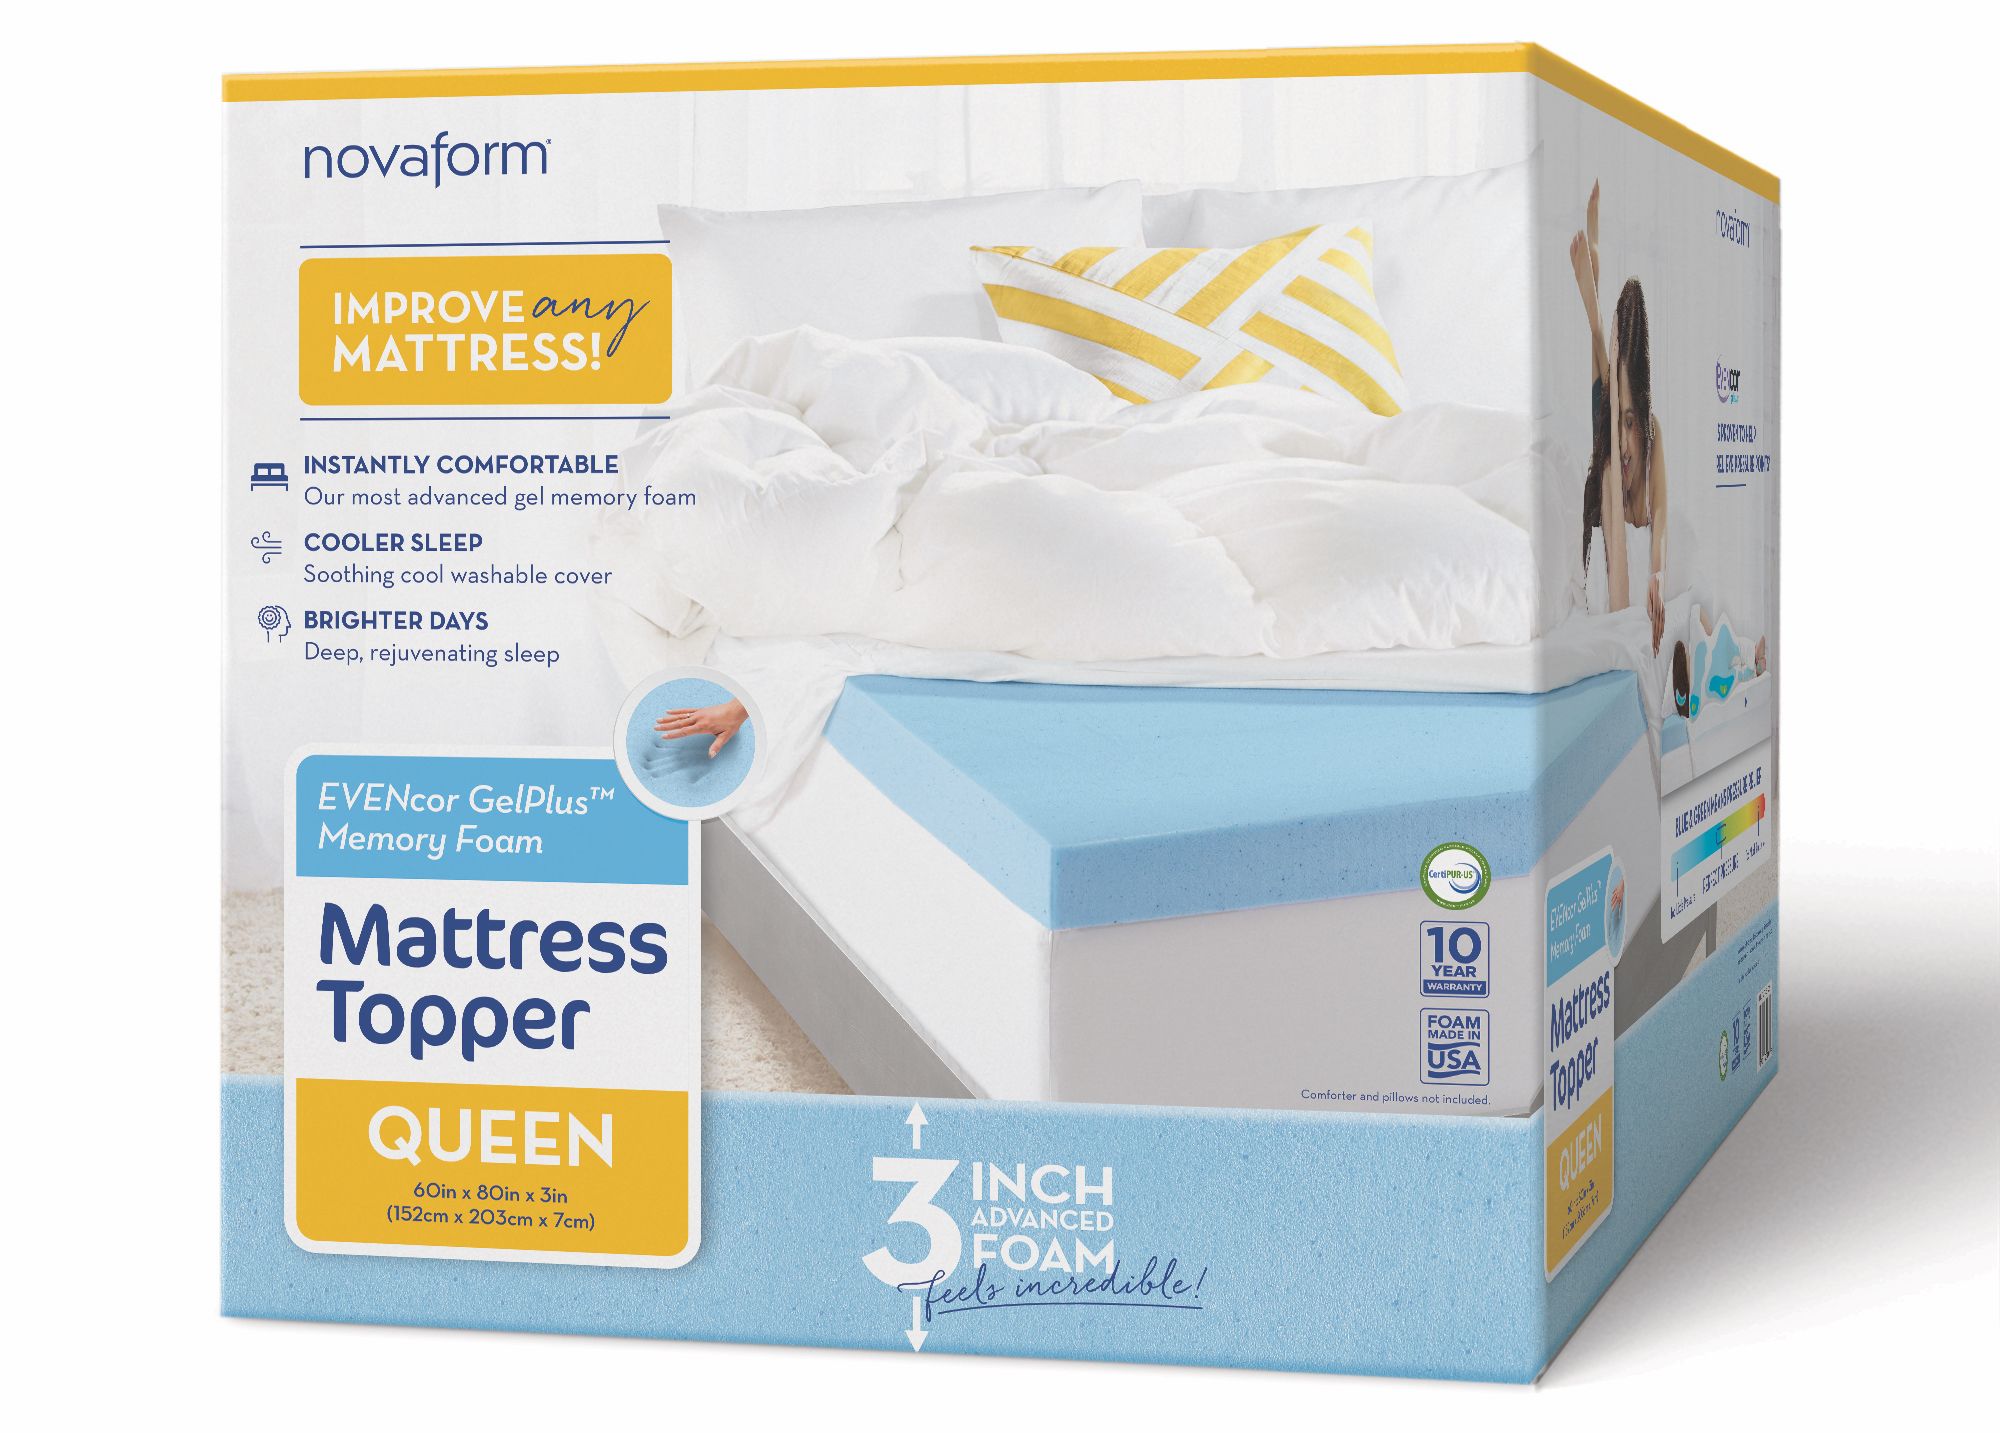 novaform mattress topper 3 inch reviews evencor twin